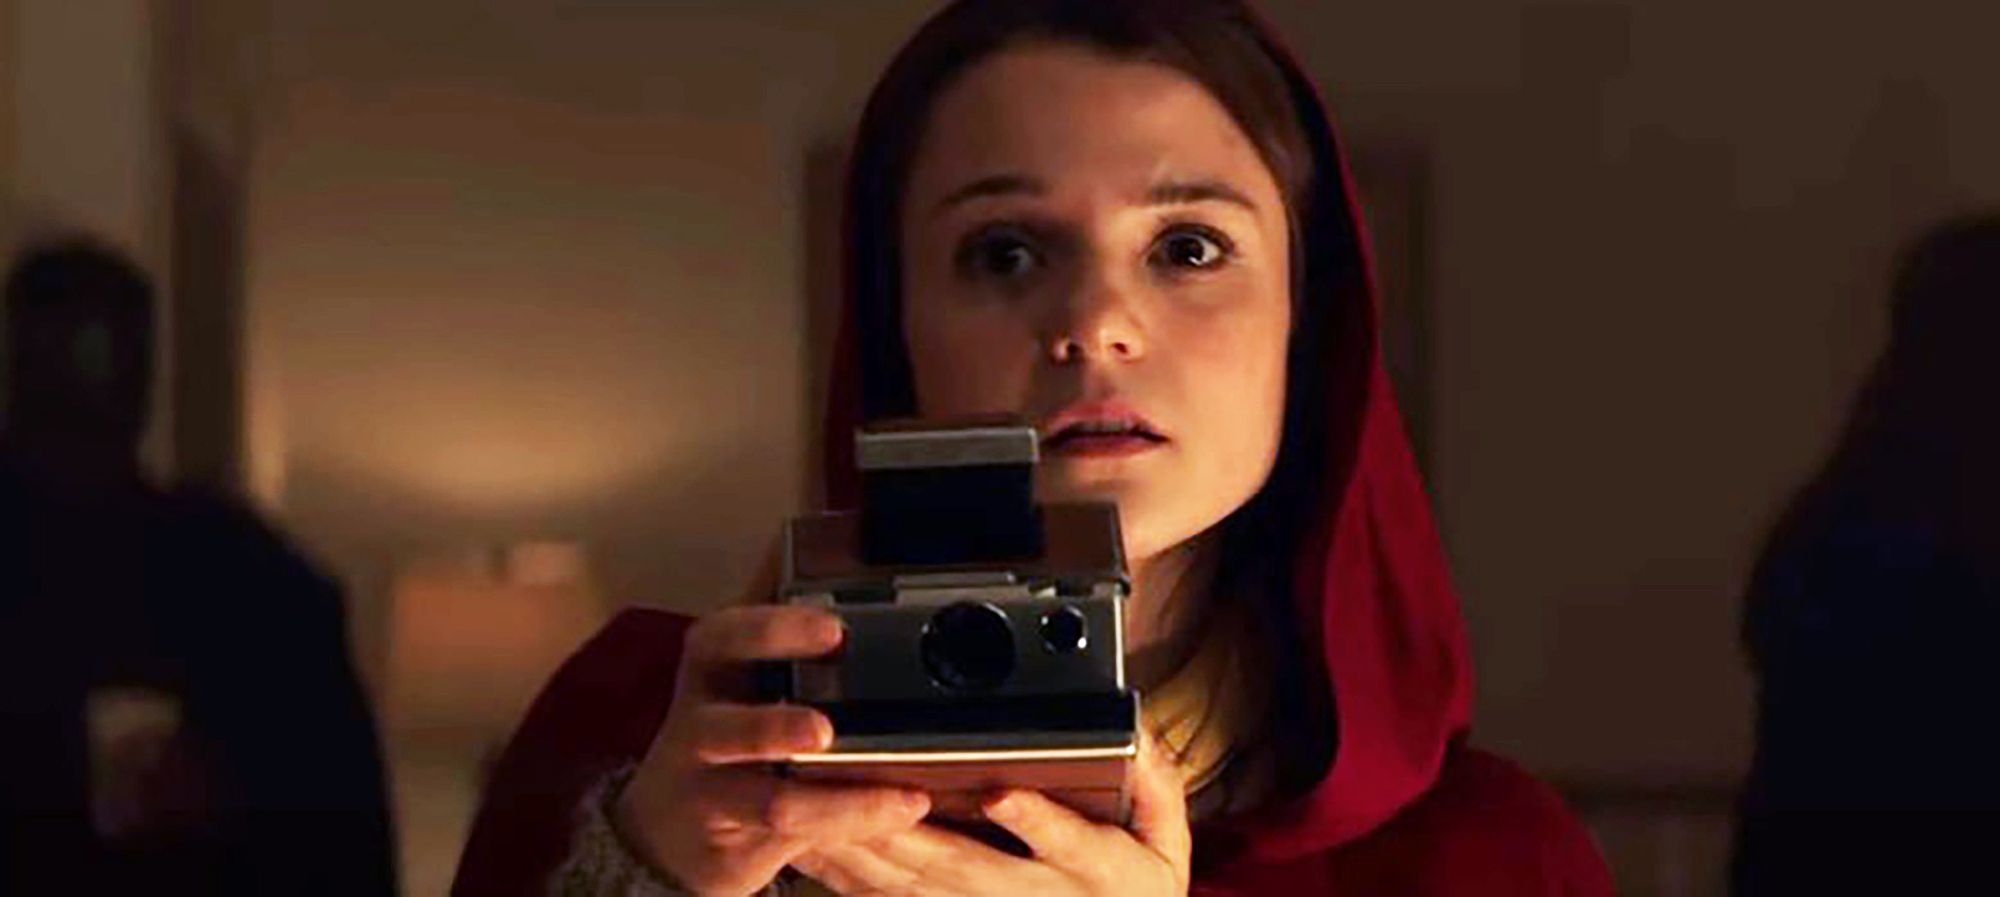 Polaroid Movie Trailer - Polaroid Horror Movie Trailer